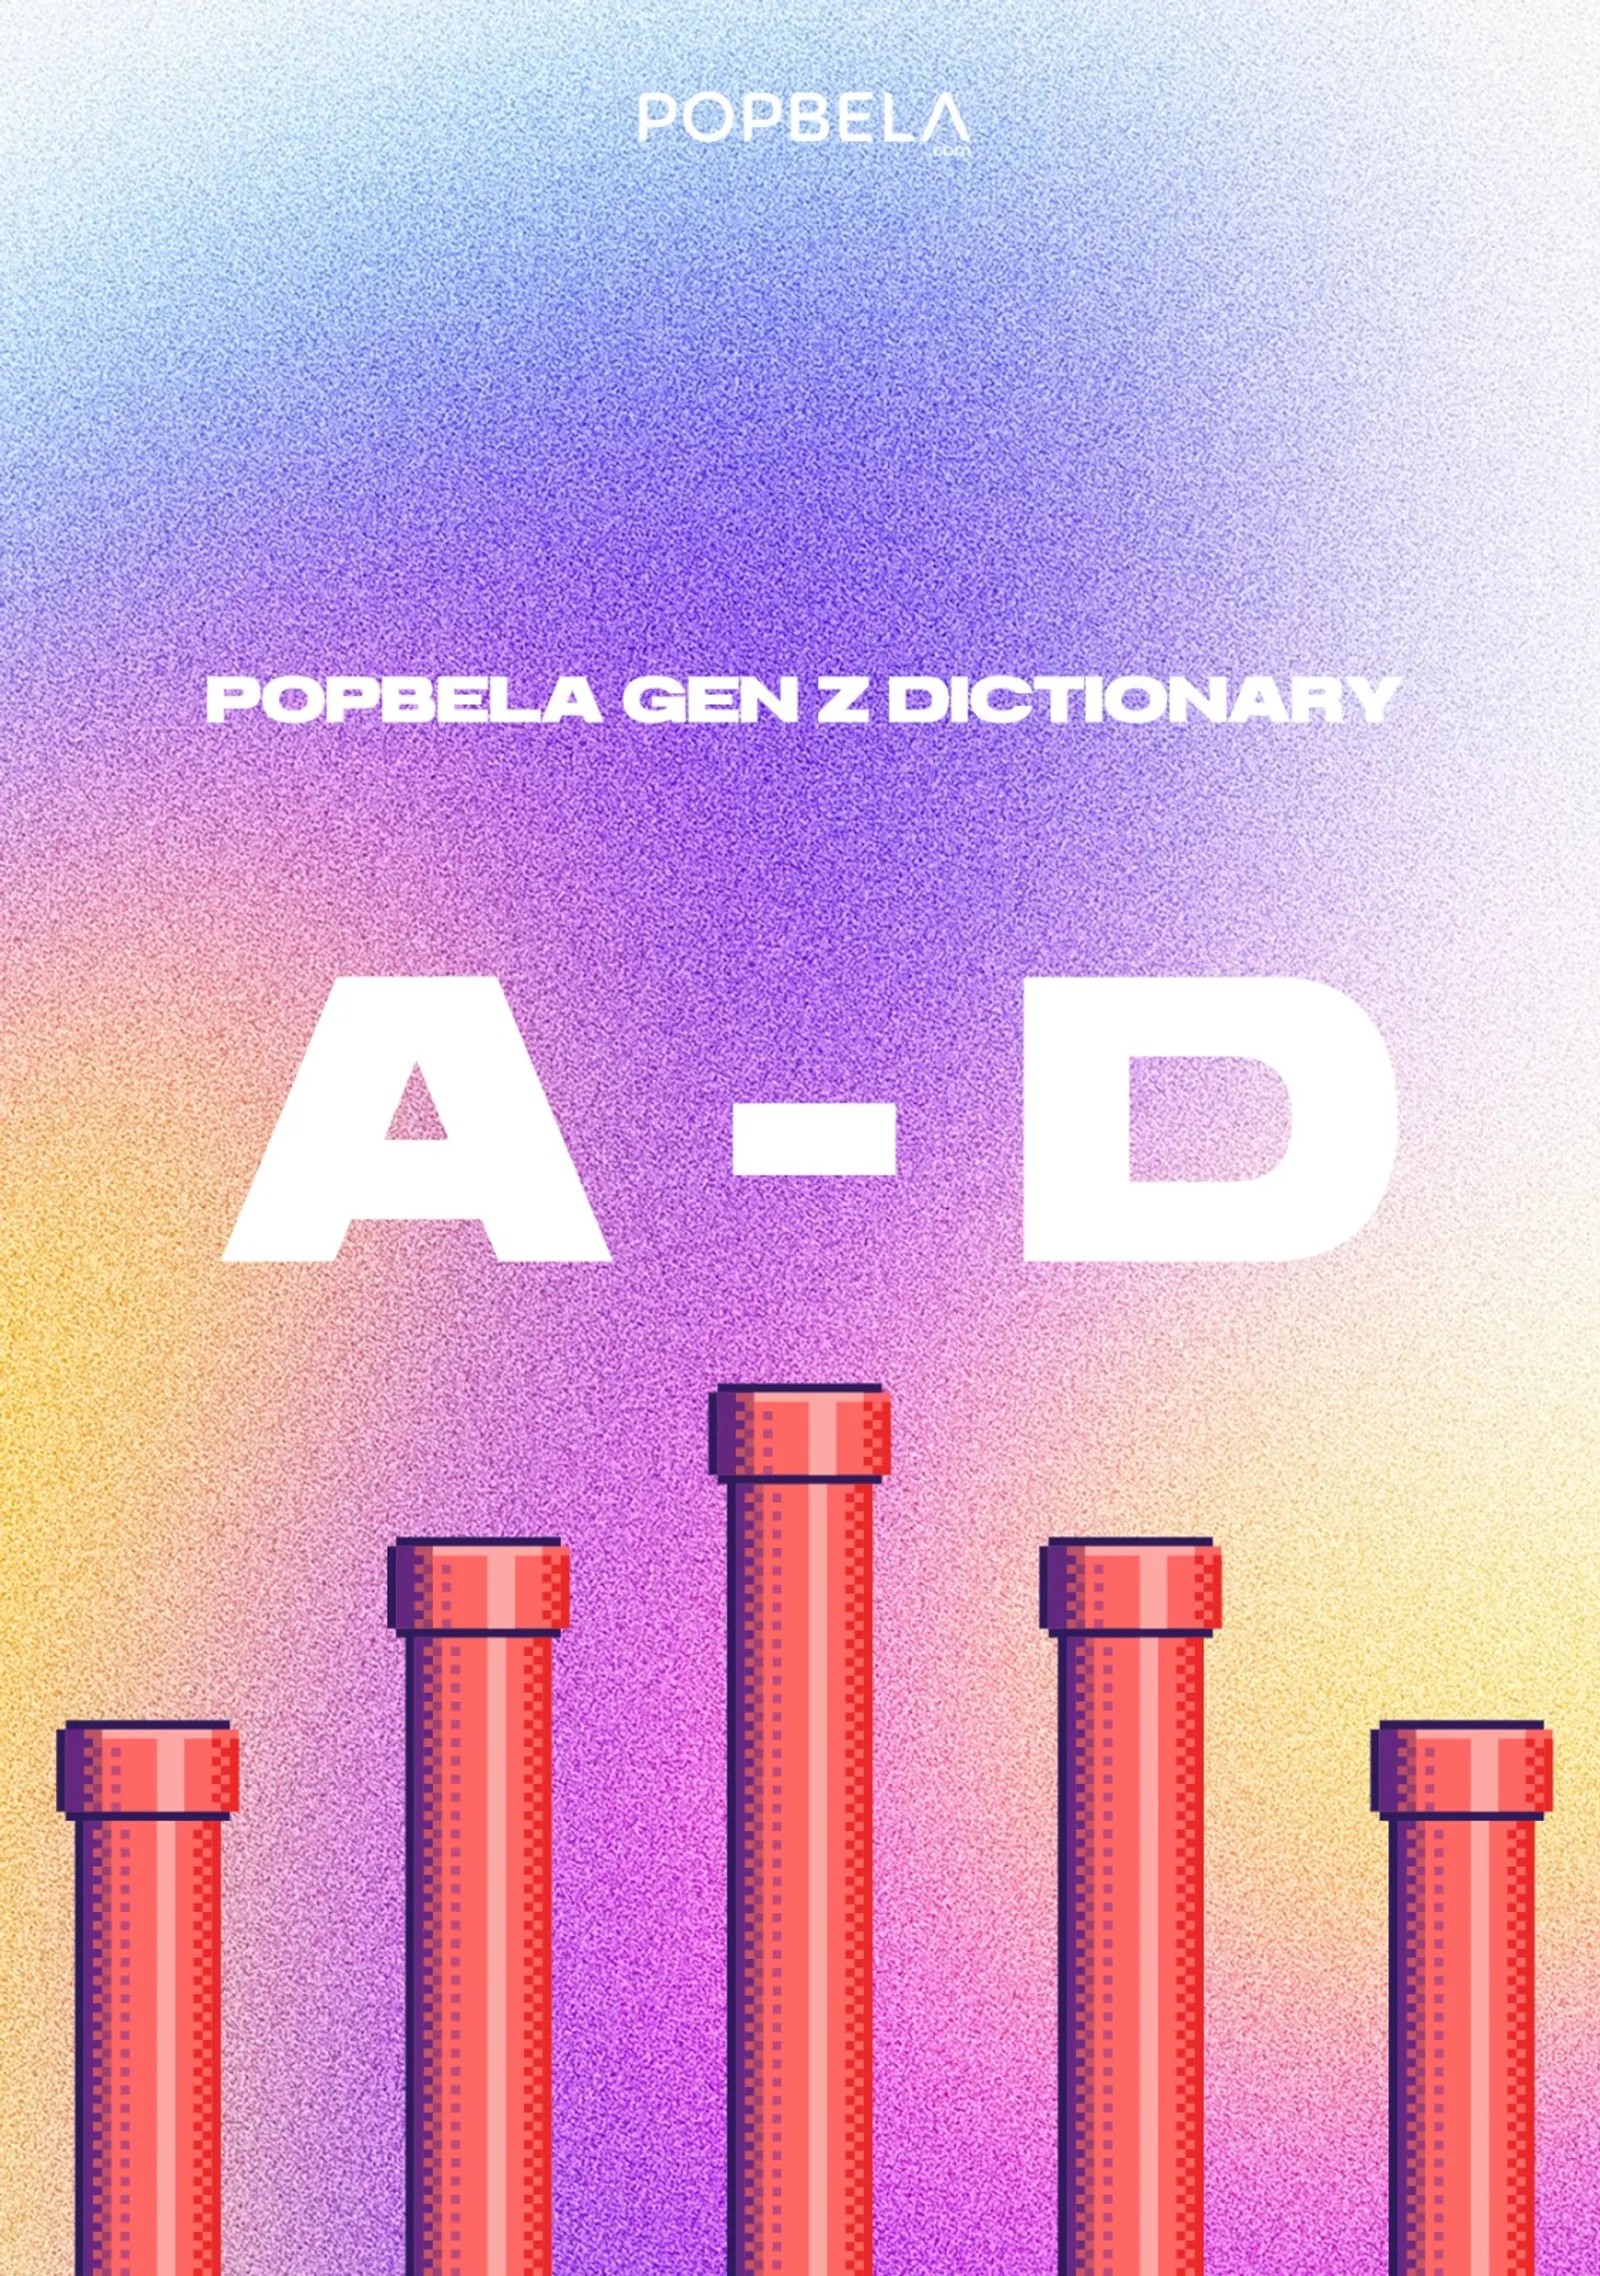 Free Download: POPBELA Gen Z Dictionary